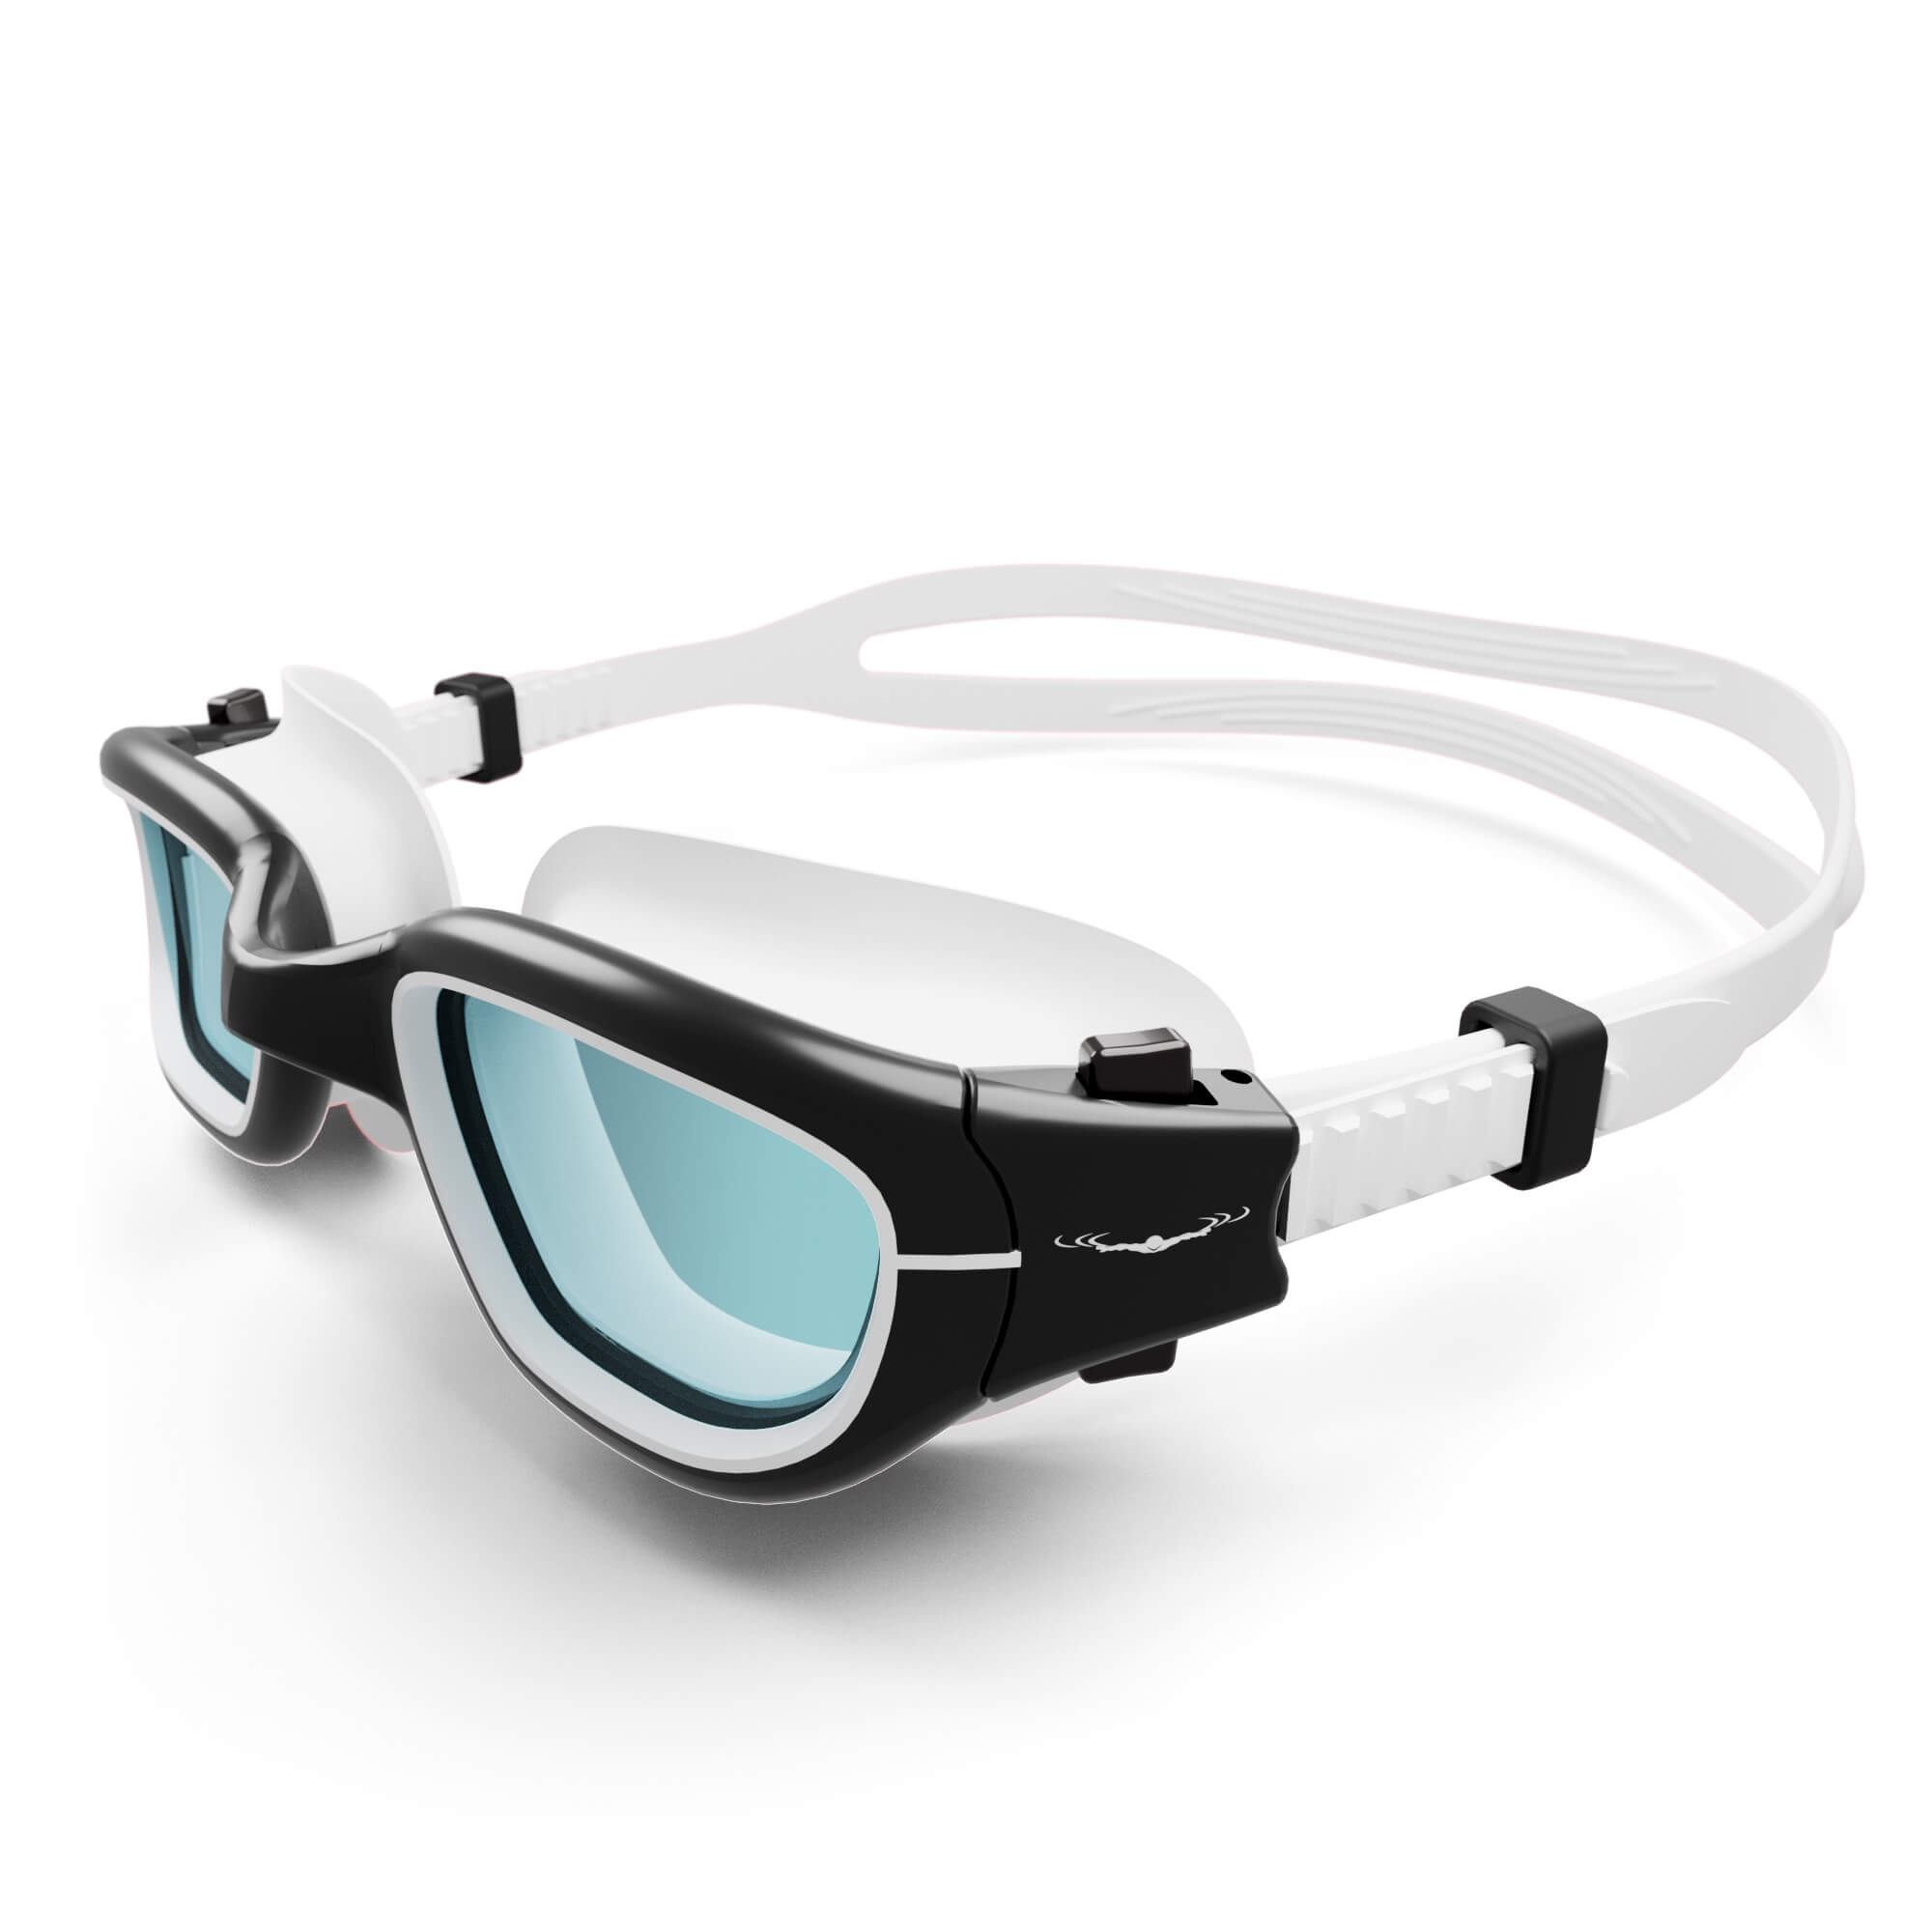 AQTIVAQUA DX-MINI: The Ultimate Kids Swim Goggles for Safe & Fun 